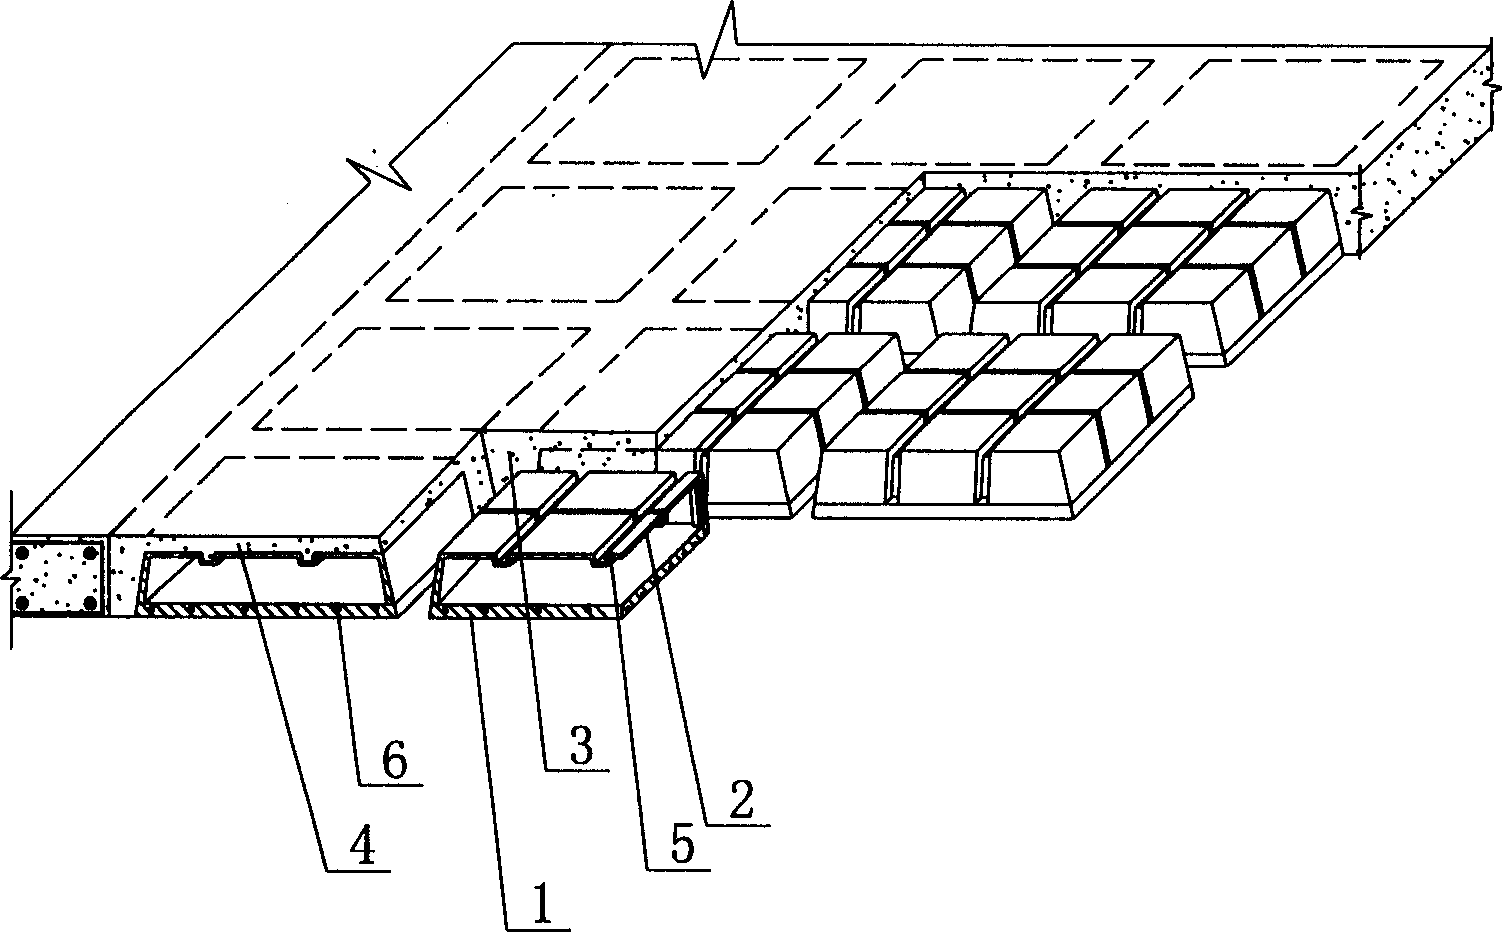 Hollow floor slab with hidden and dense ribs